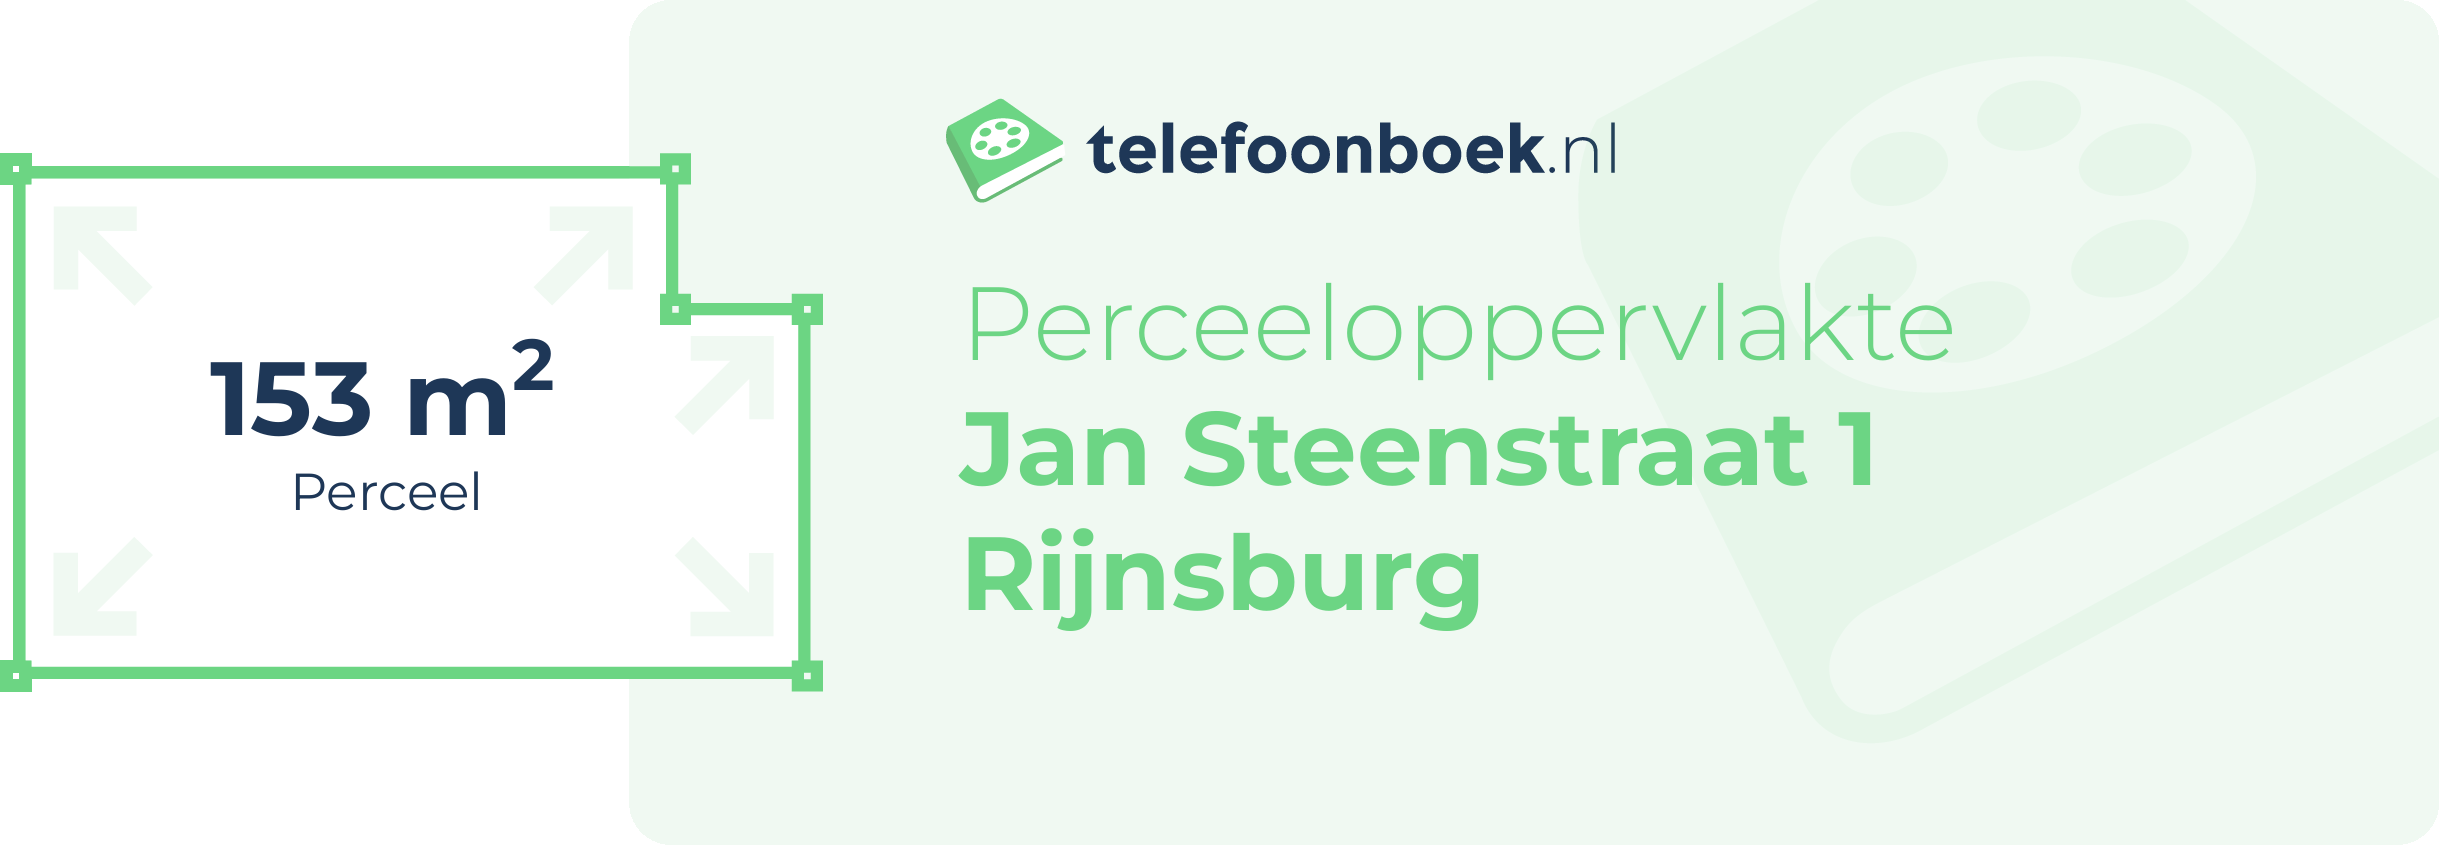 Perceeloppervlakte Jan Steenstraat 1 Rijnsburg